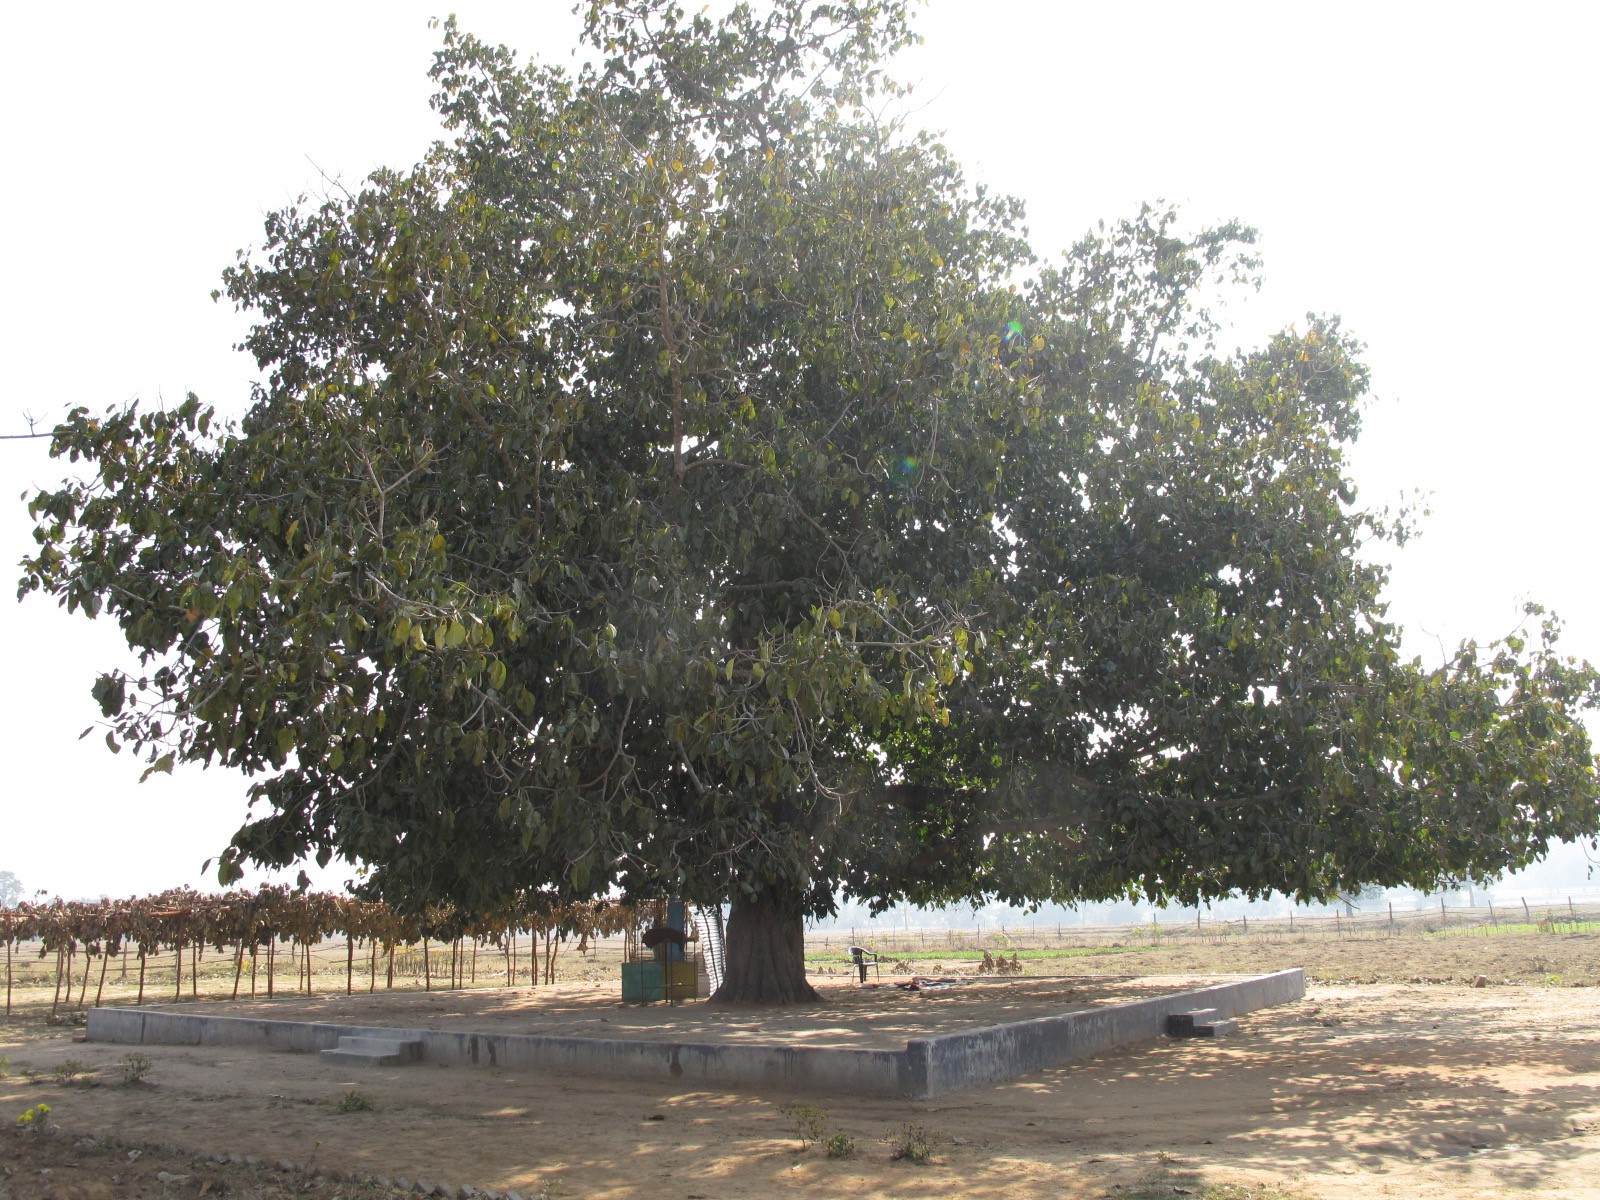 Chhattisgarh in India - huge tree with St Mary beneath